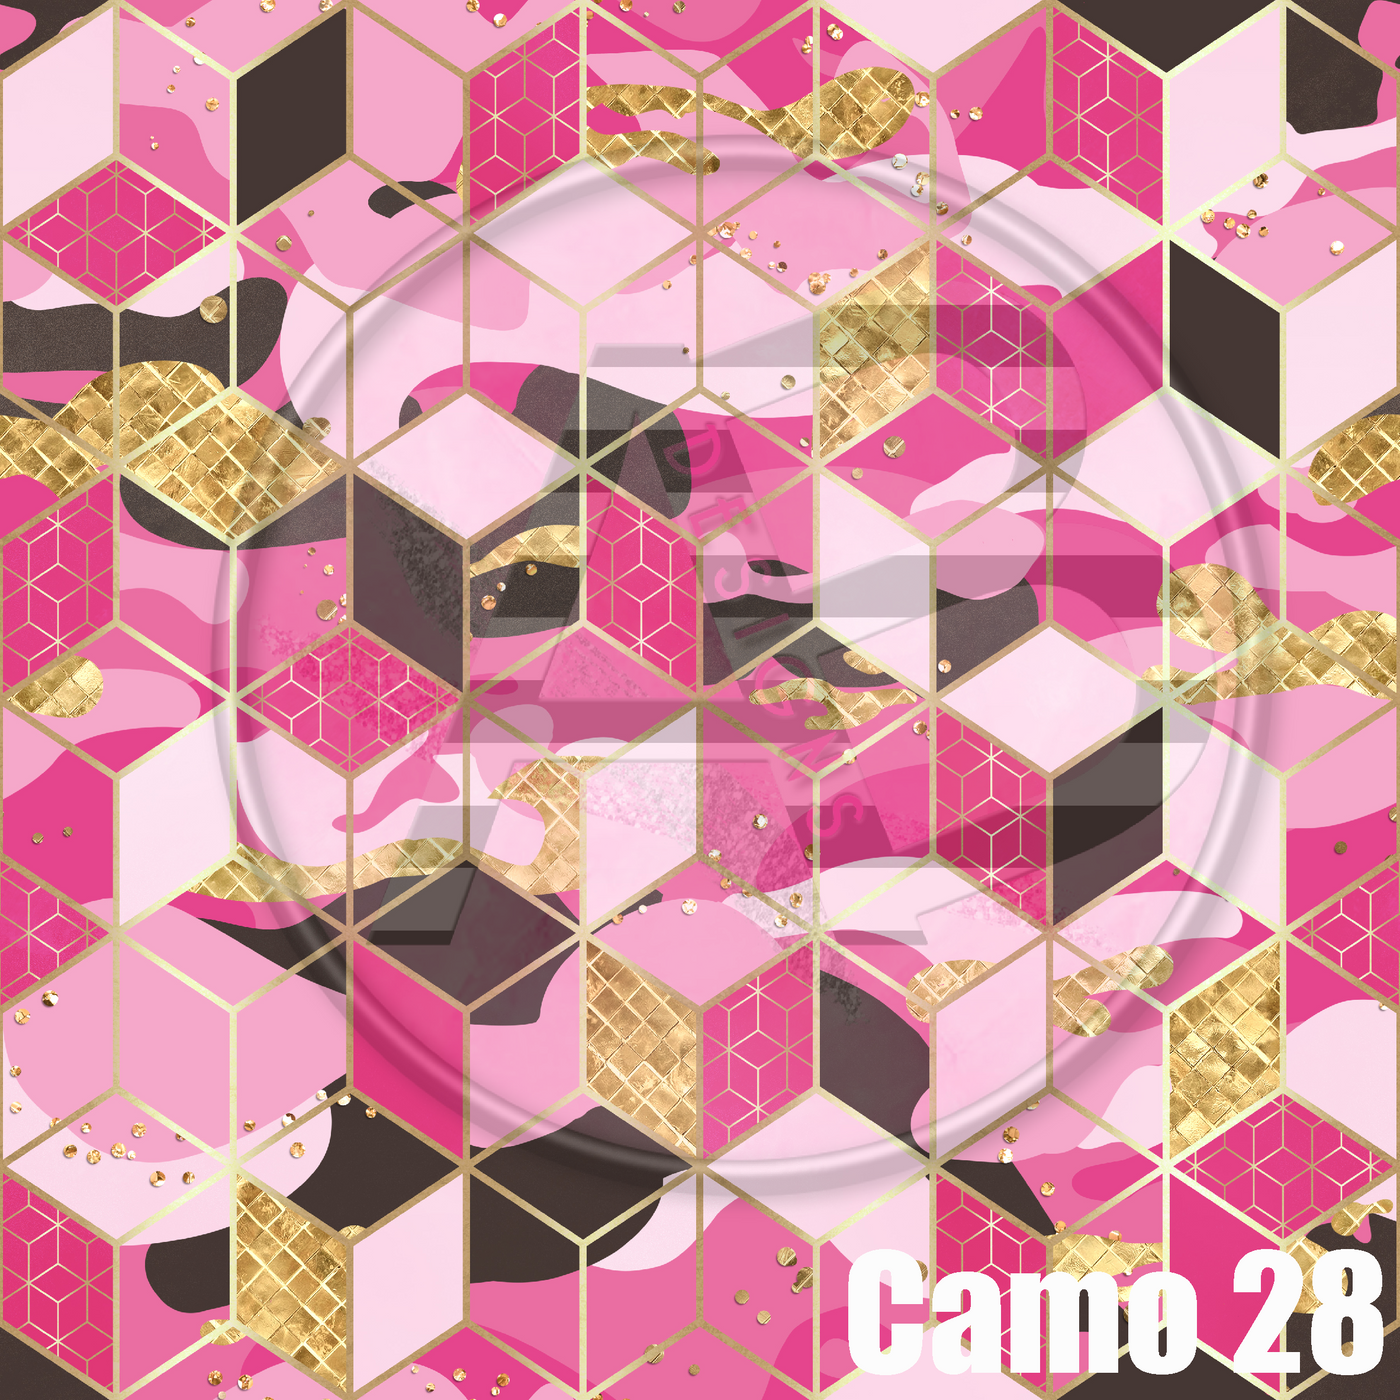 Adhesive Patterned Vinyl - Camo 28